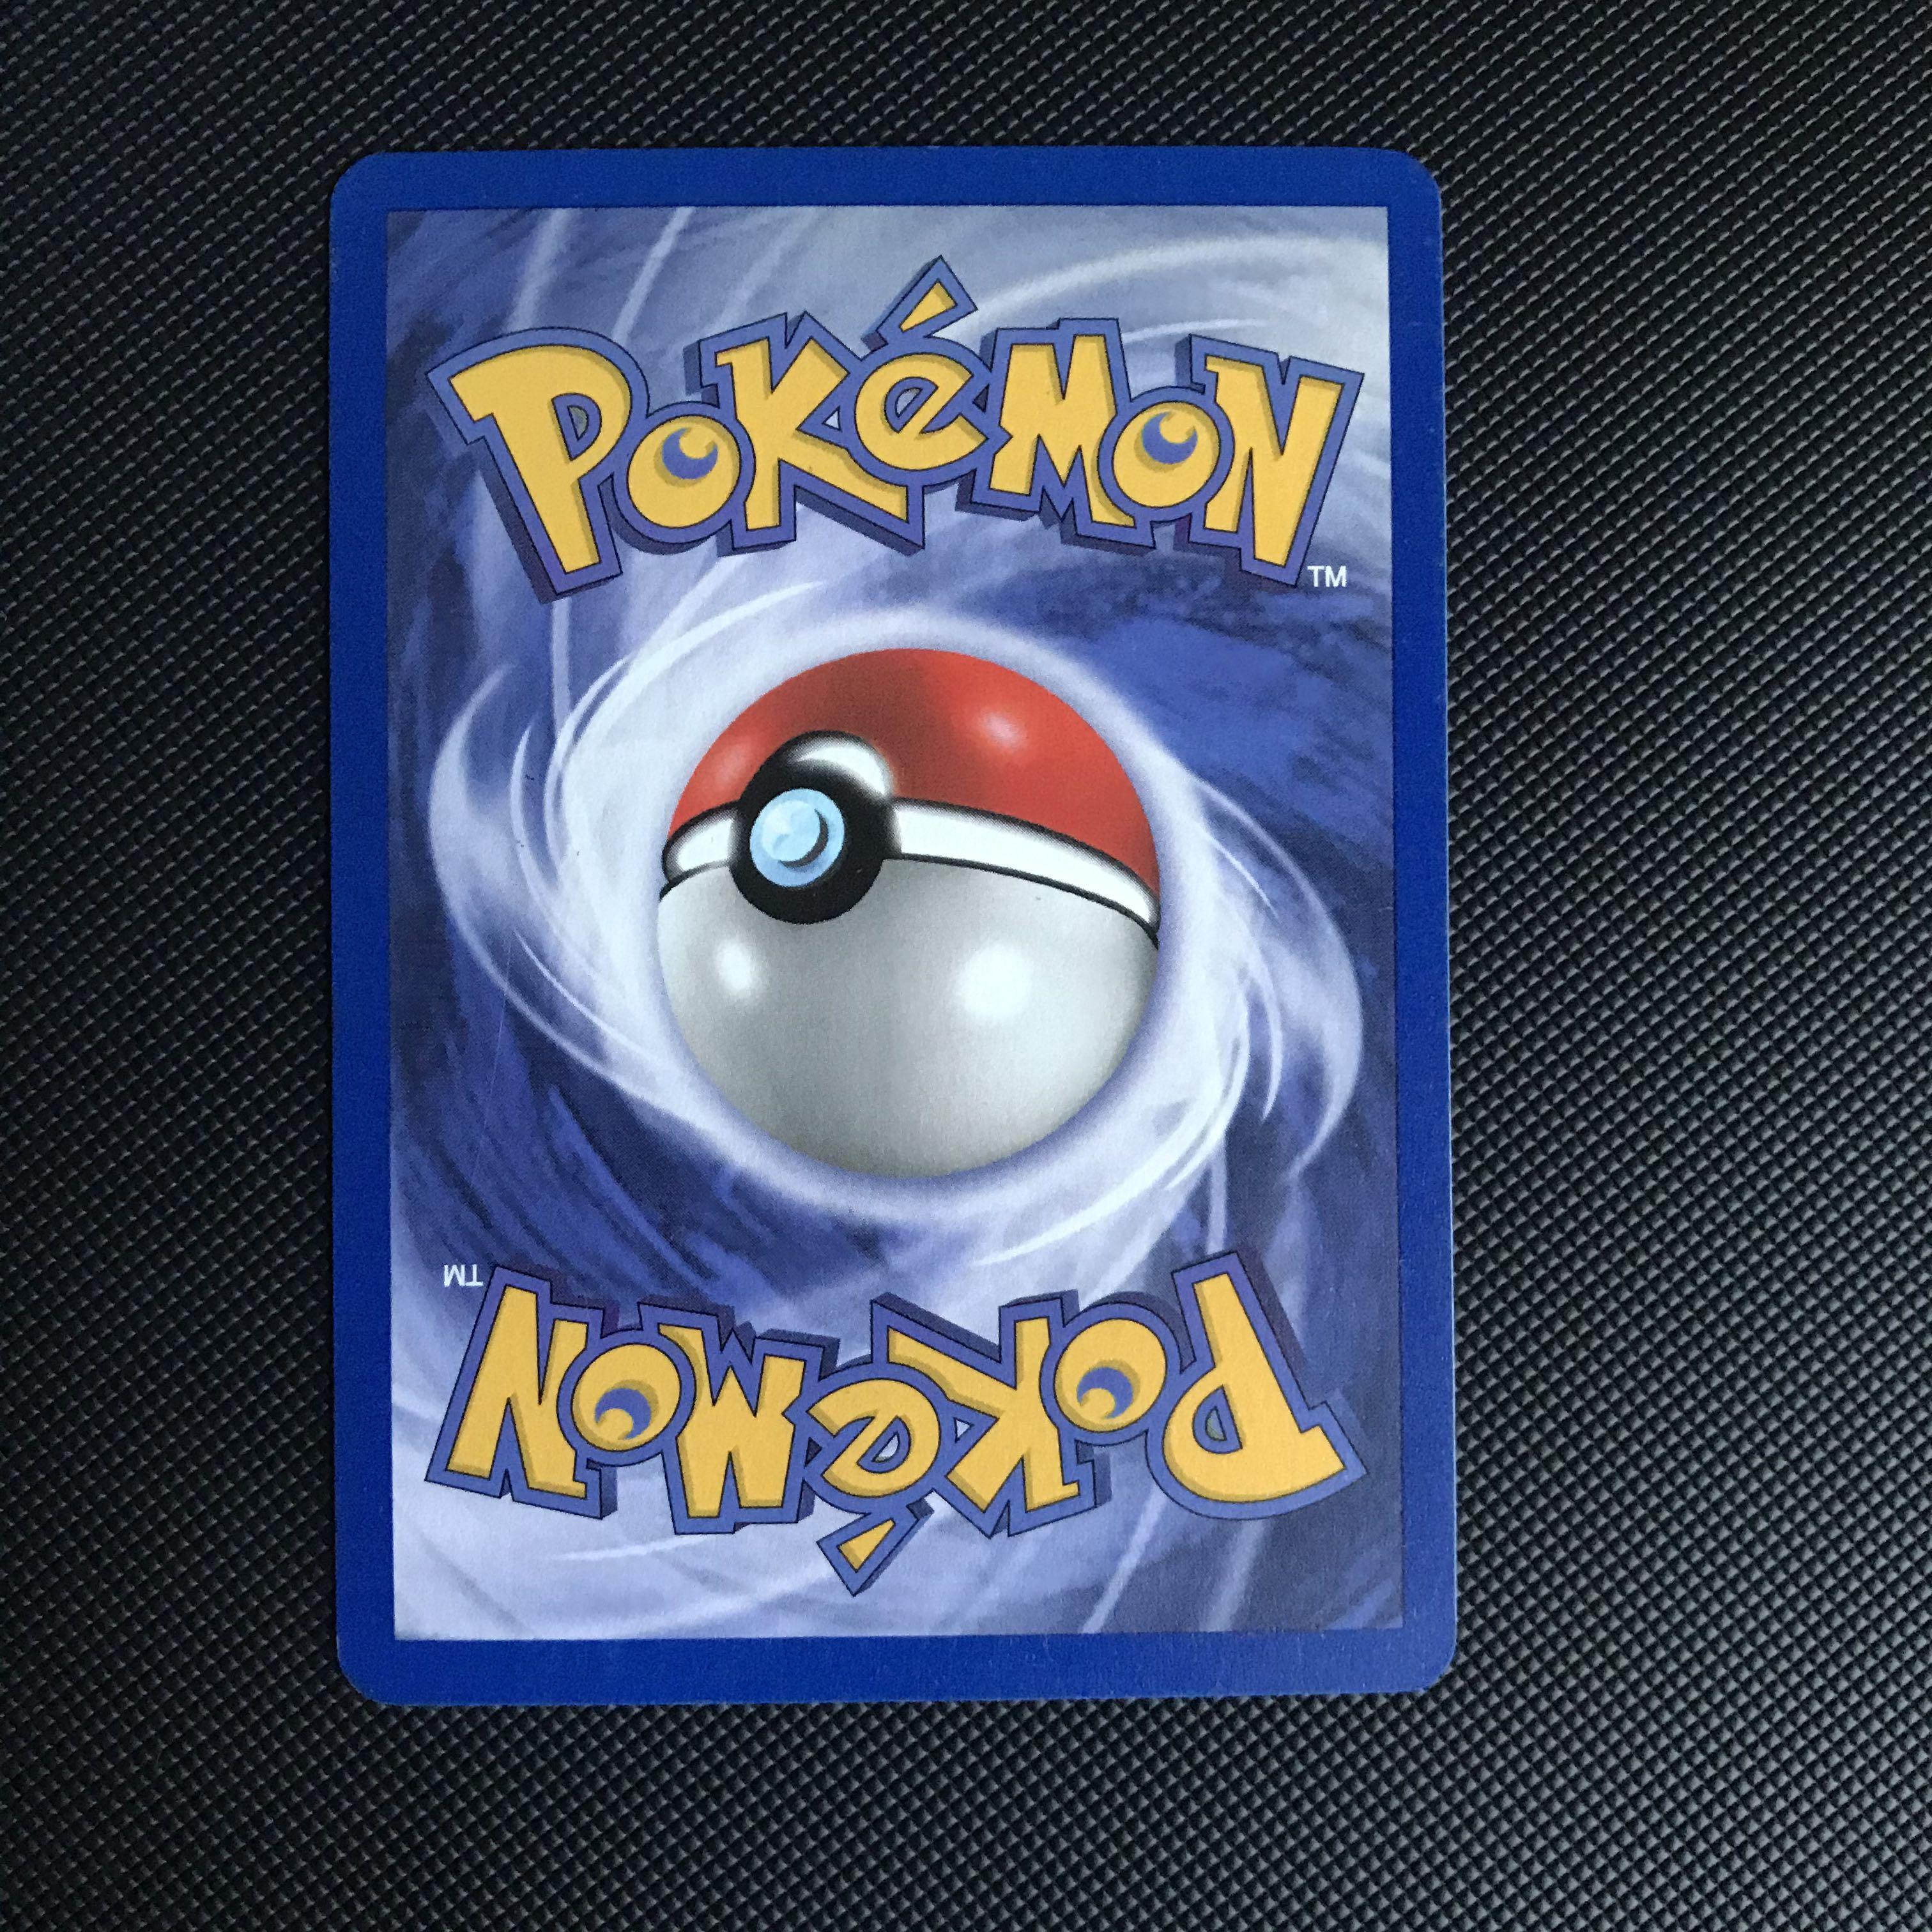 Gardevoir EX 96/100 Pokémon card from Ex Sandstorm for sale at best price